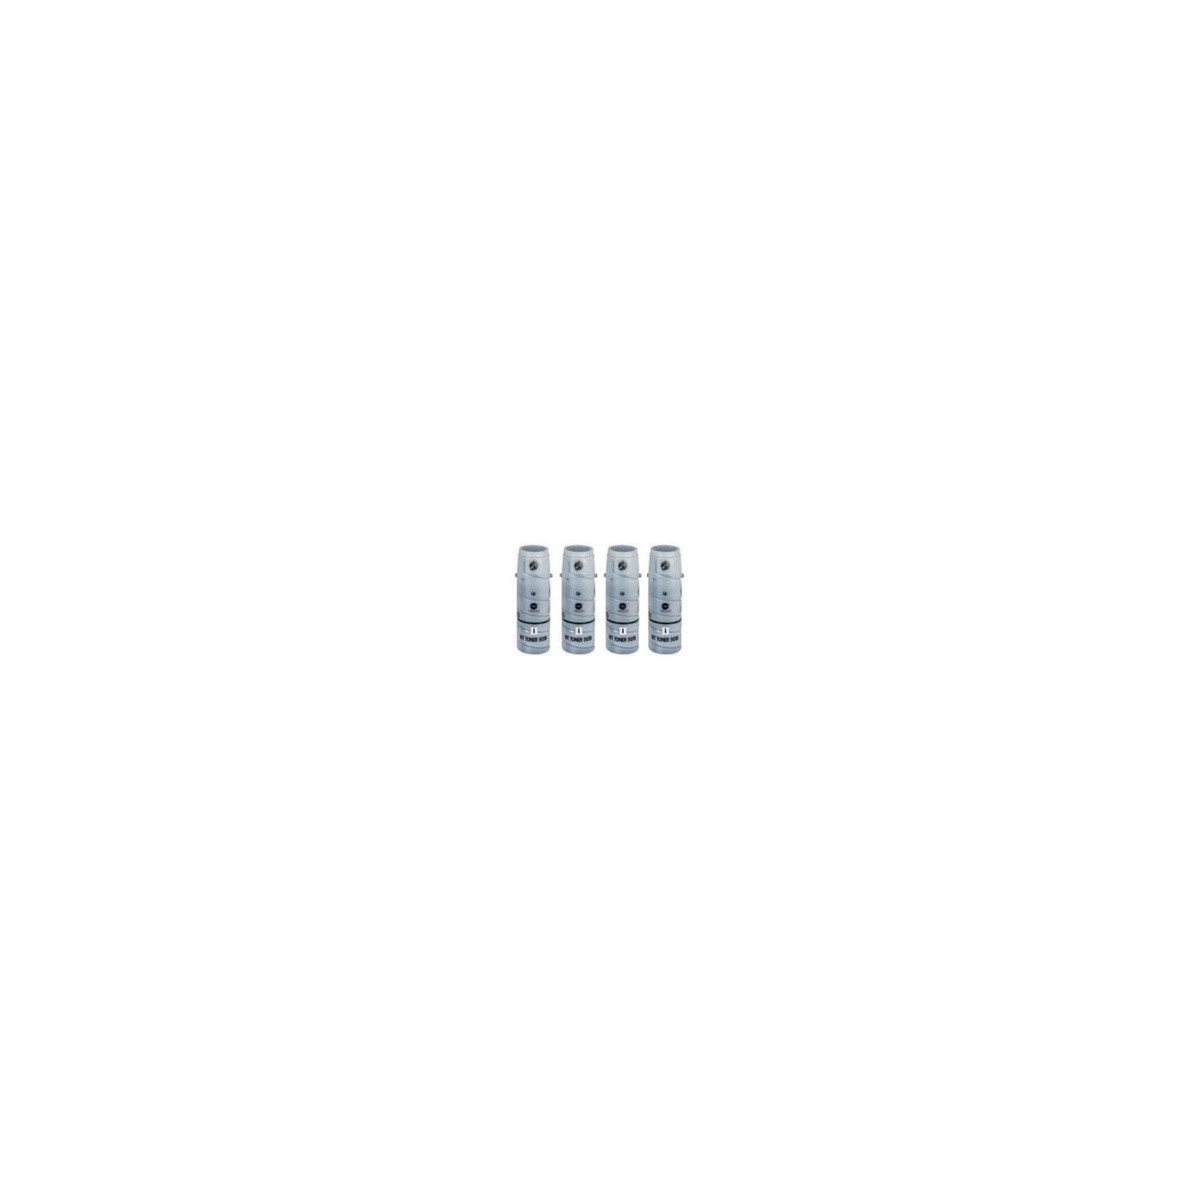 Konica Minolta 501B - 8935504 - 4x Toner schwarz - für EP 4000 5000 - Original - Original - Toner Cartridge